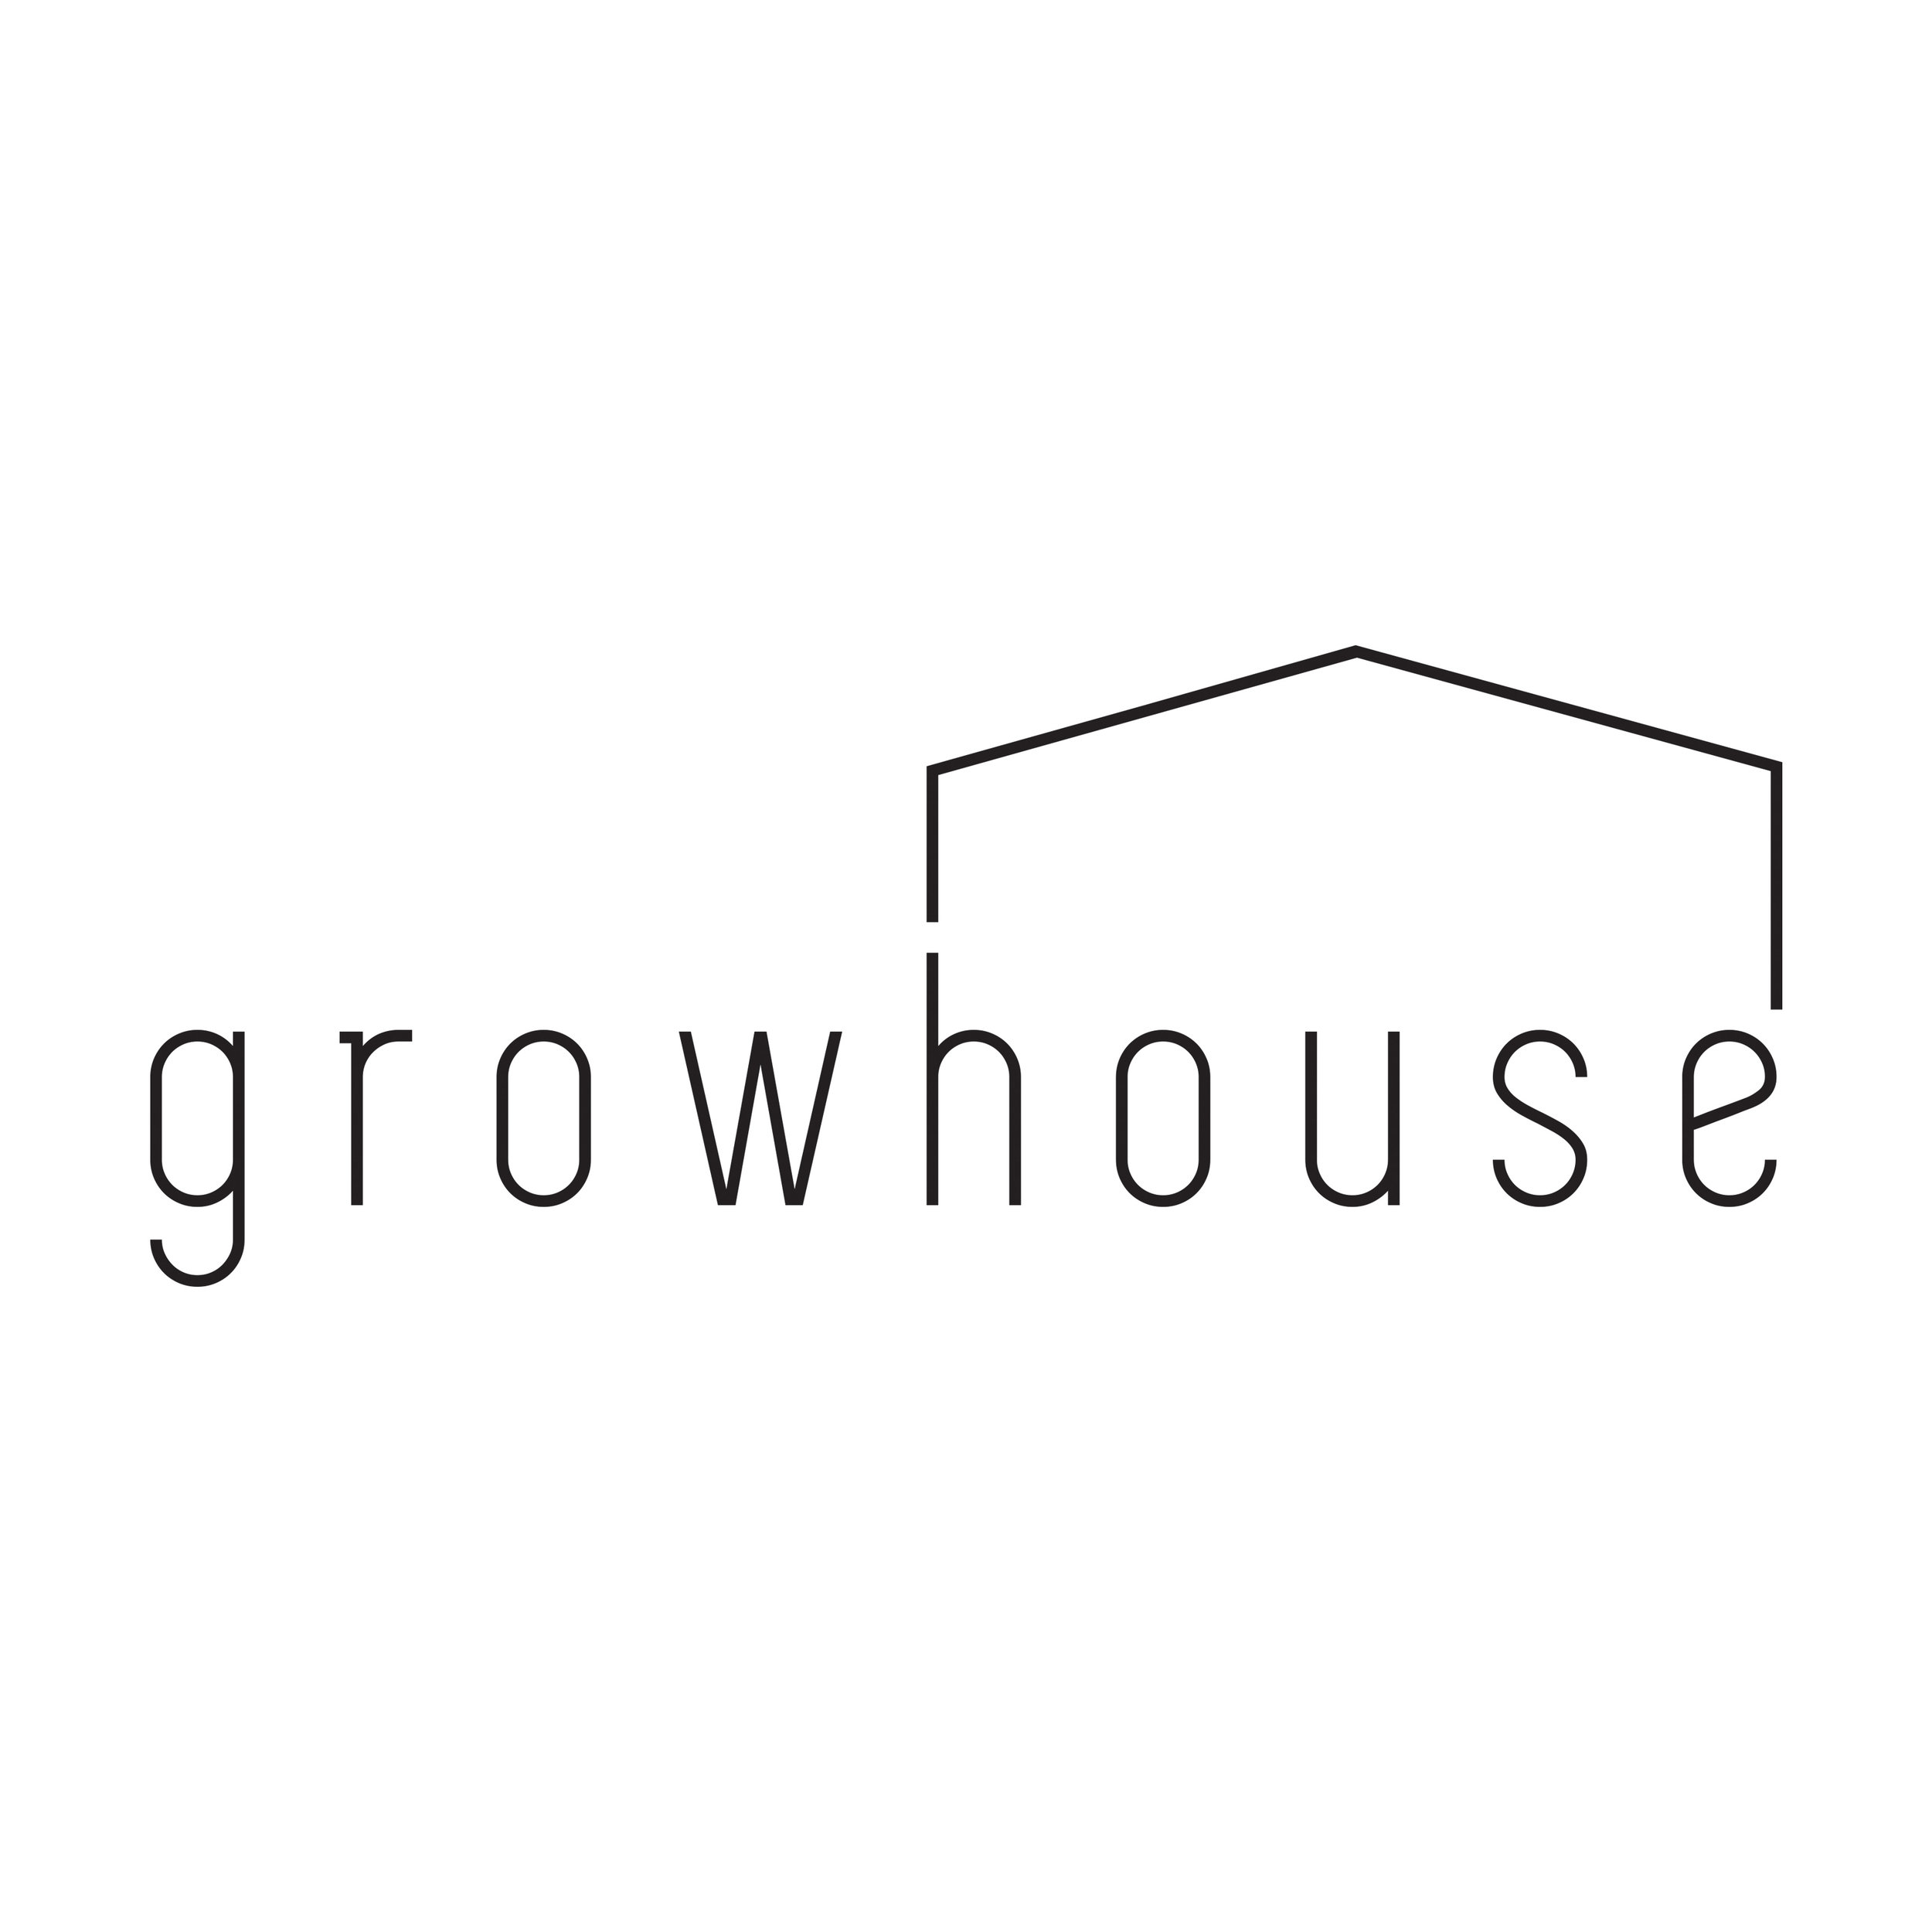 Growhouse-logo-bw-square.jpg